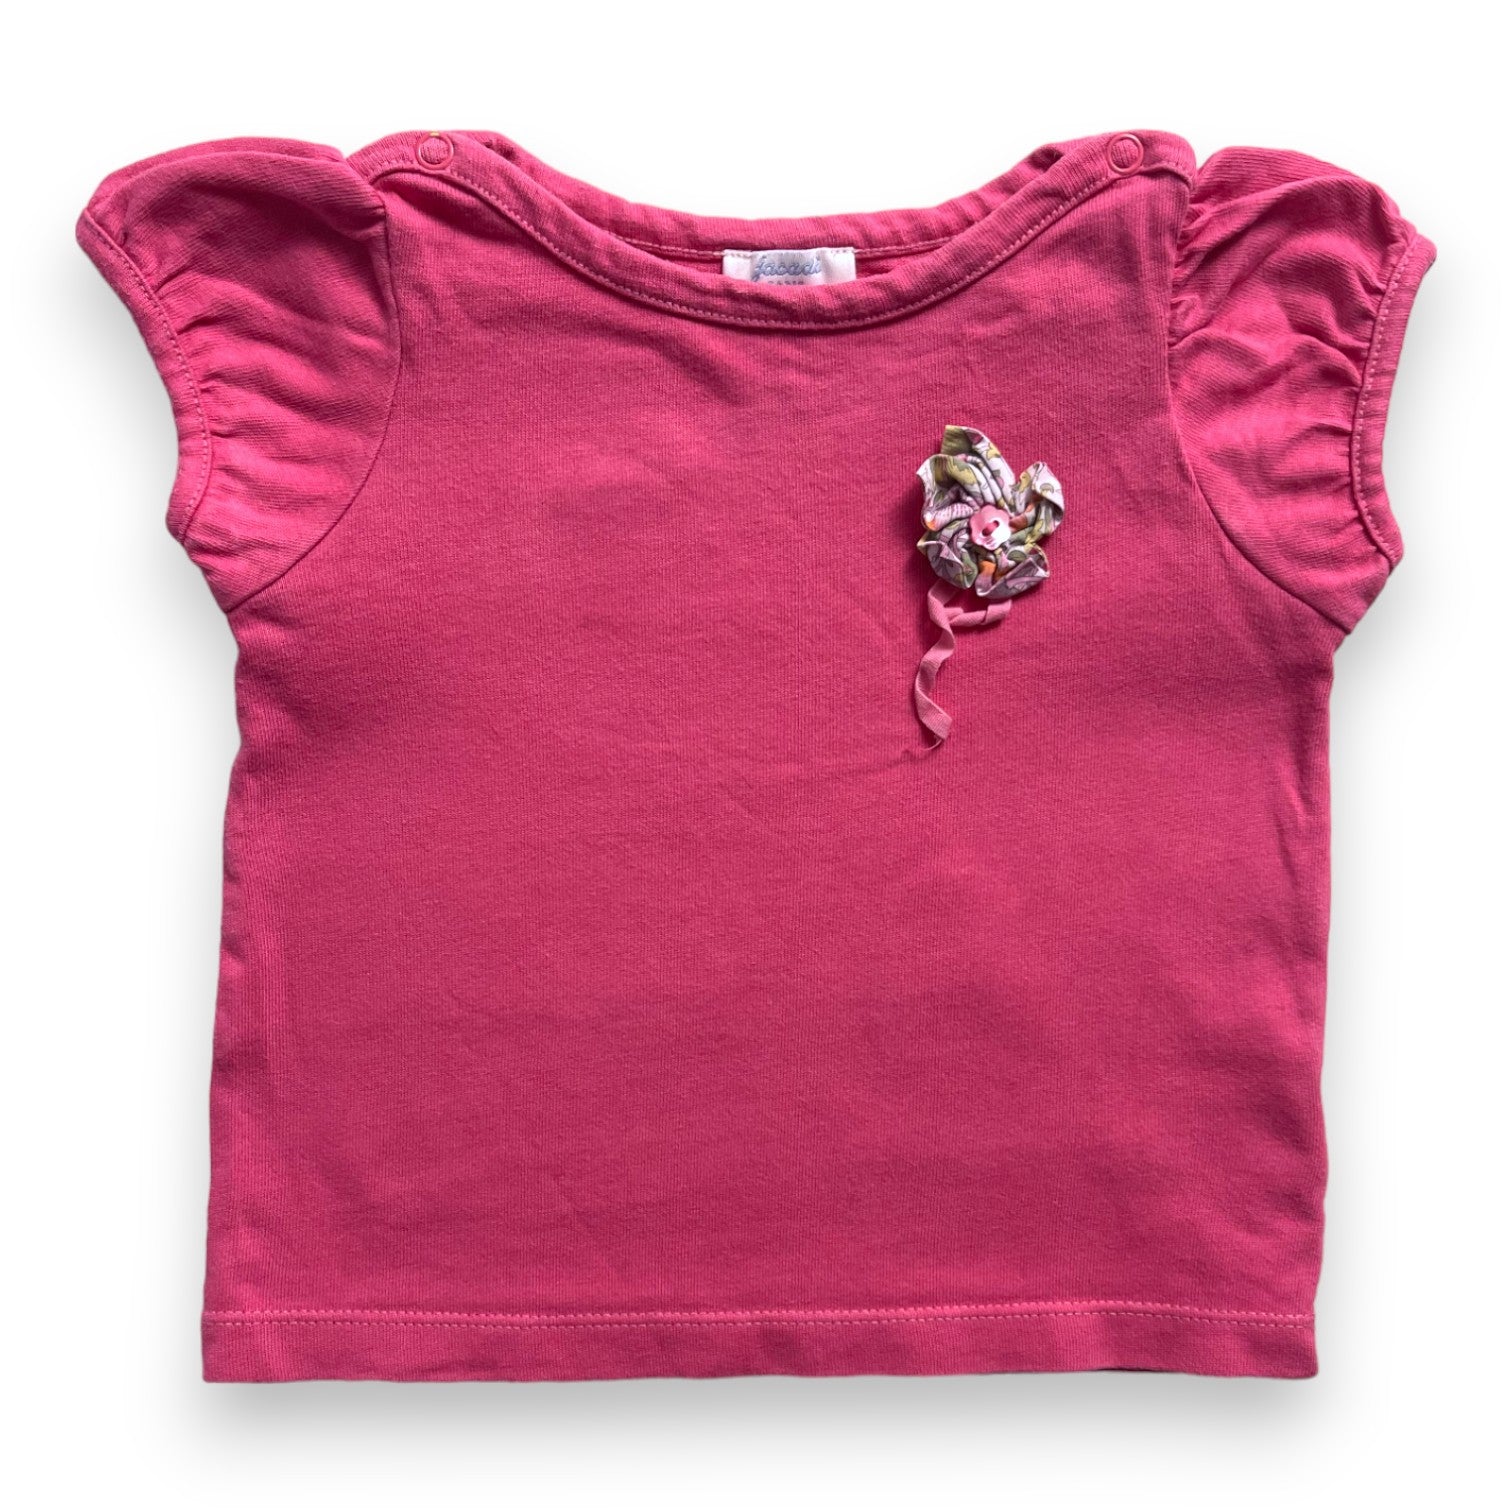 JACADI - T shirt rose fleur multicolore - 18 mois